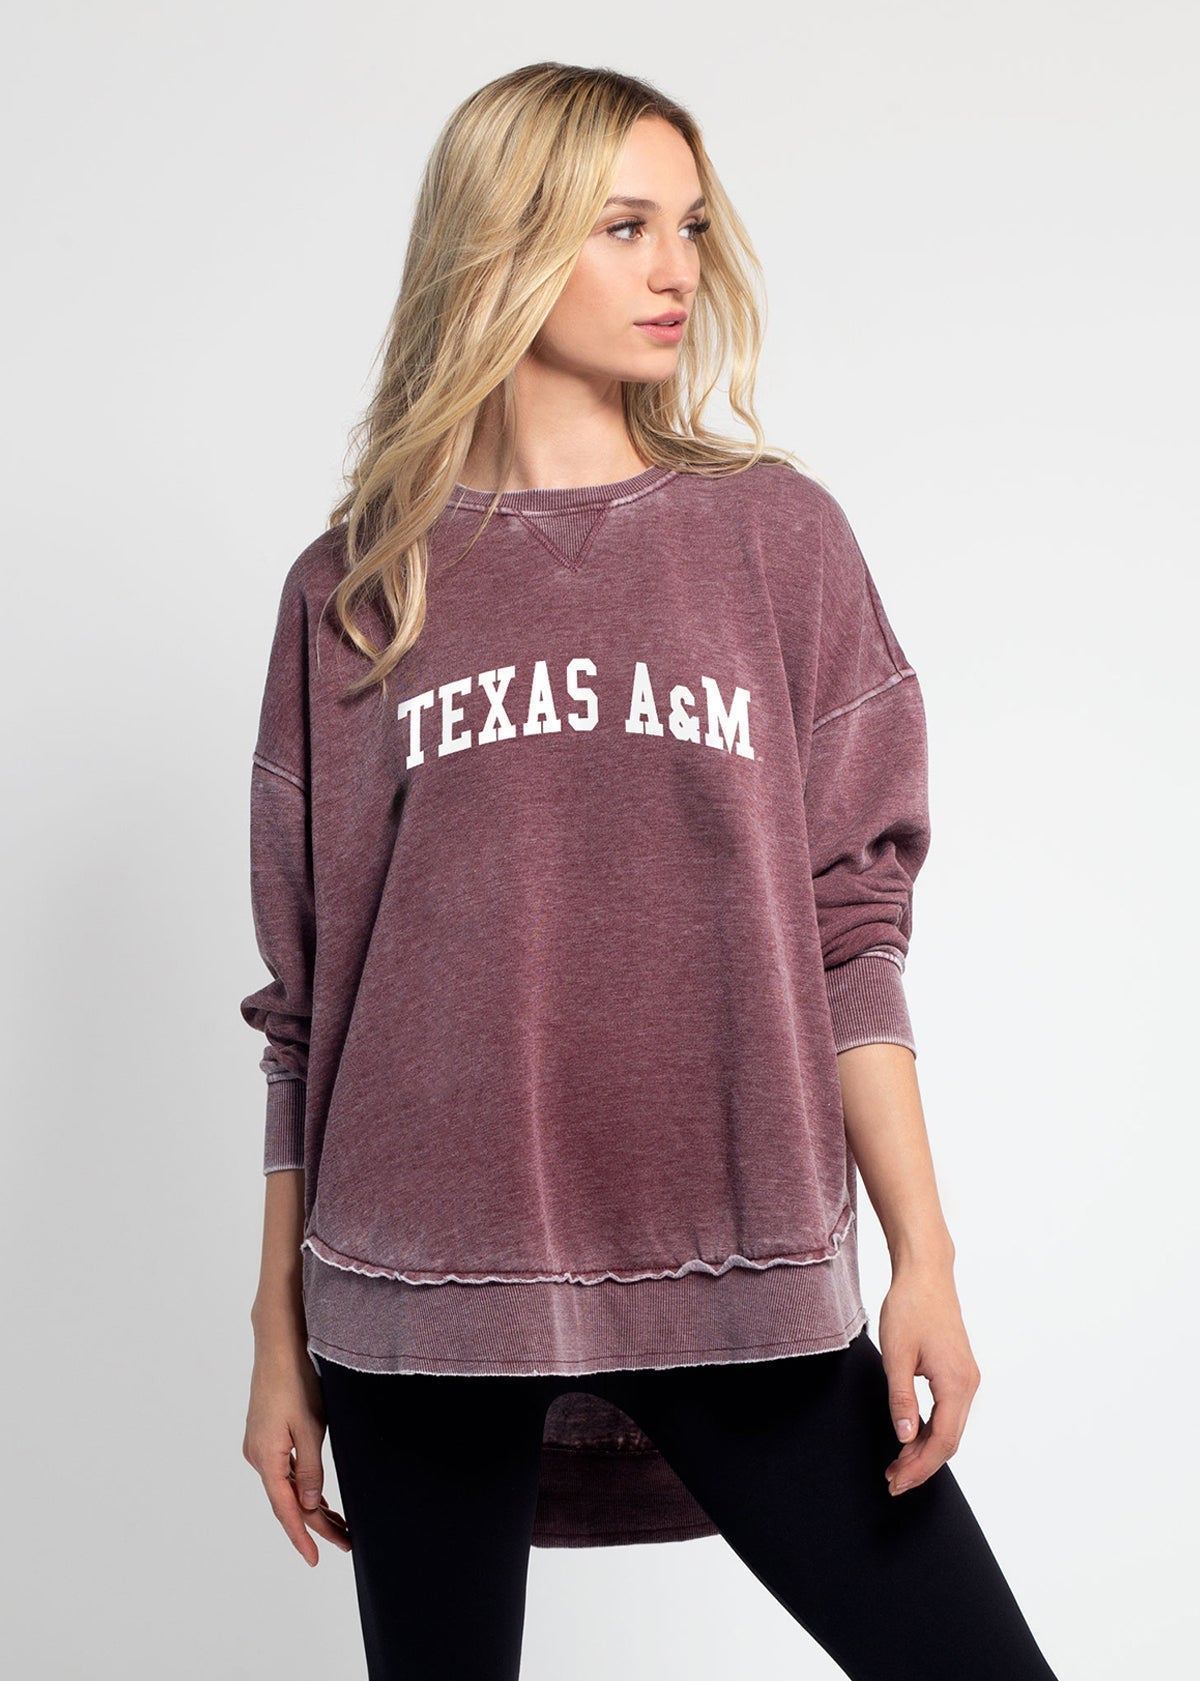 Texas A&M Aggies sweatshirt